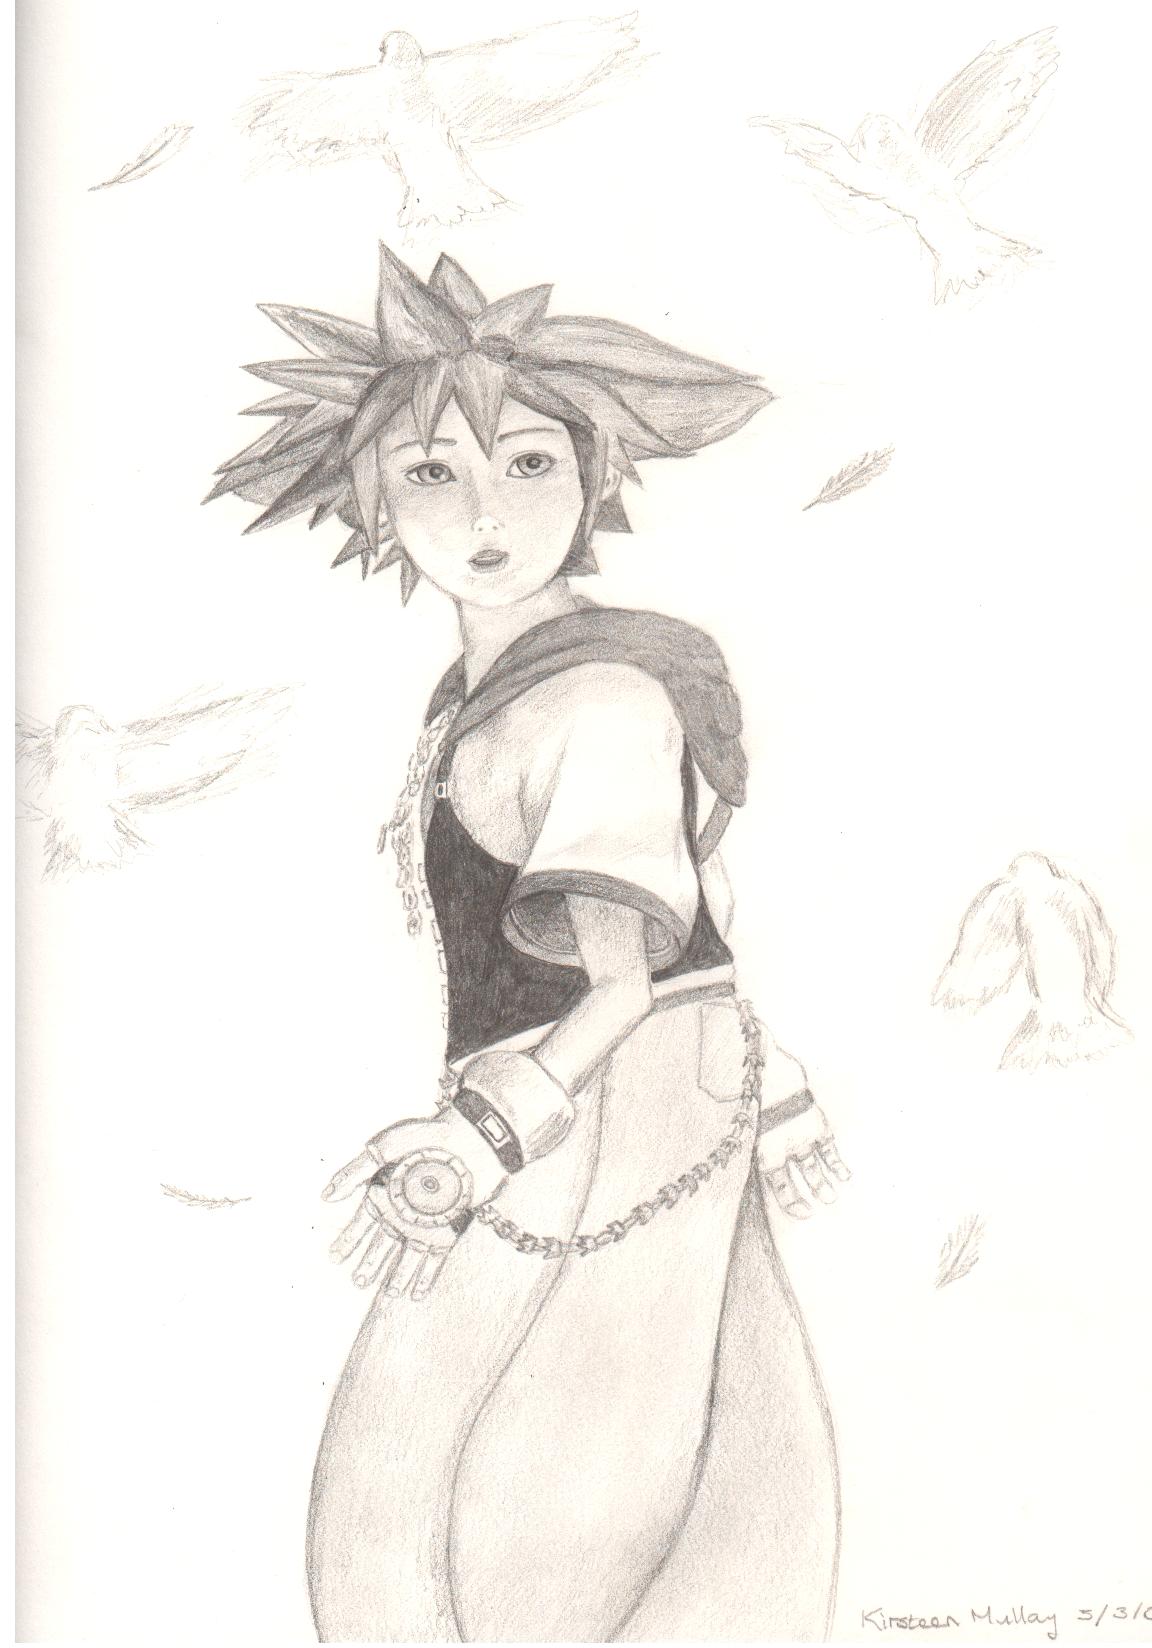 Sora - Kingdom Hearts by heylorlass